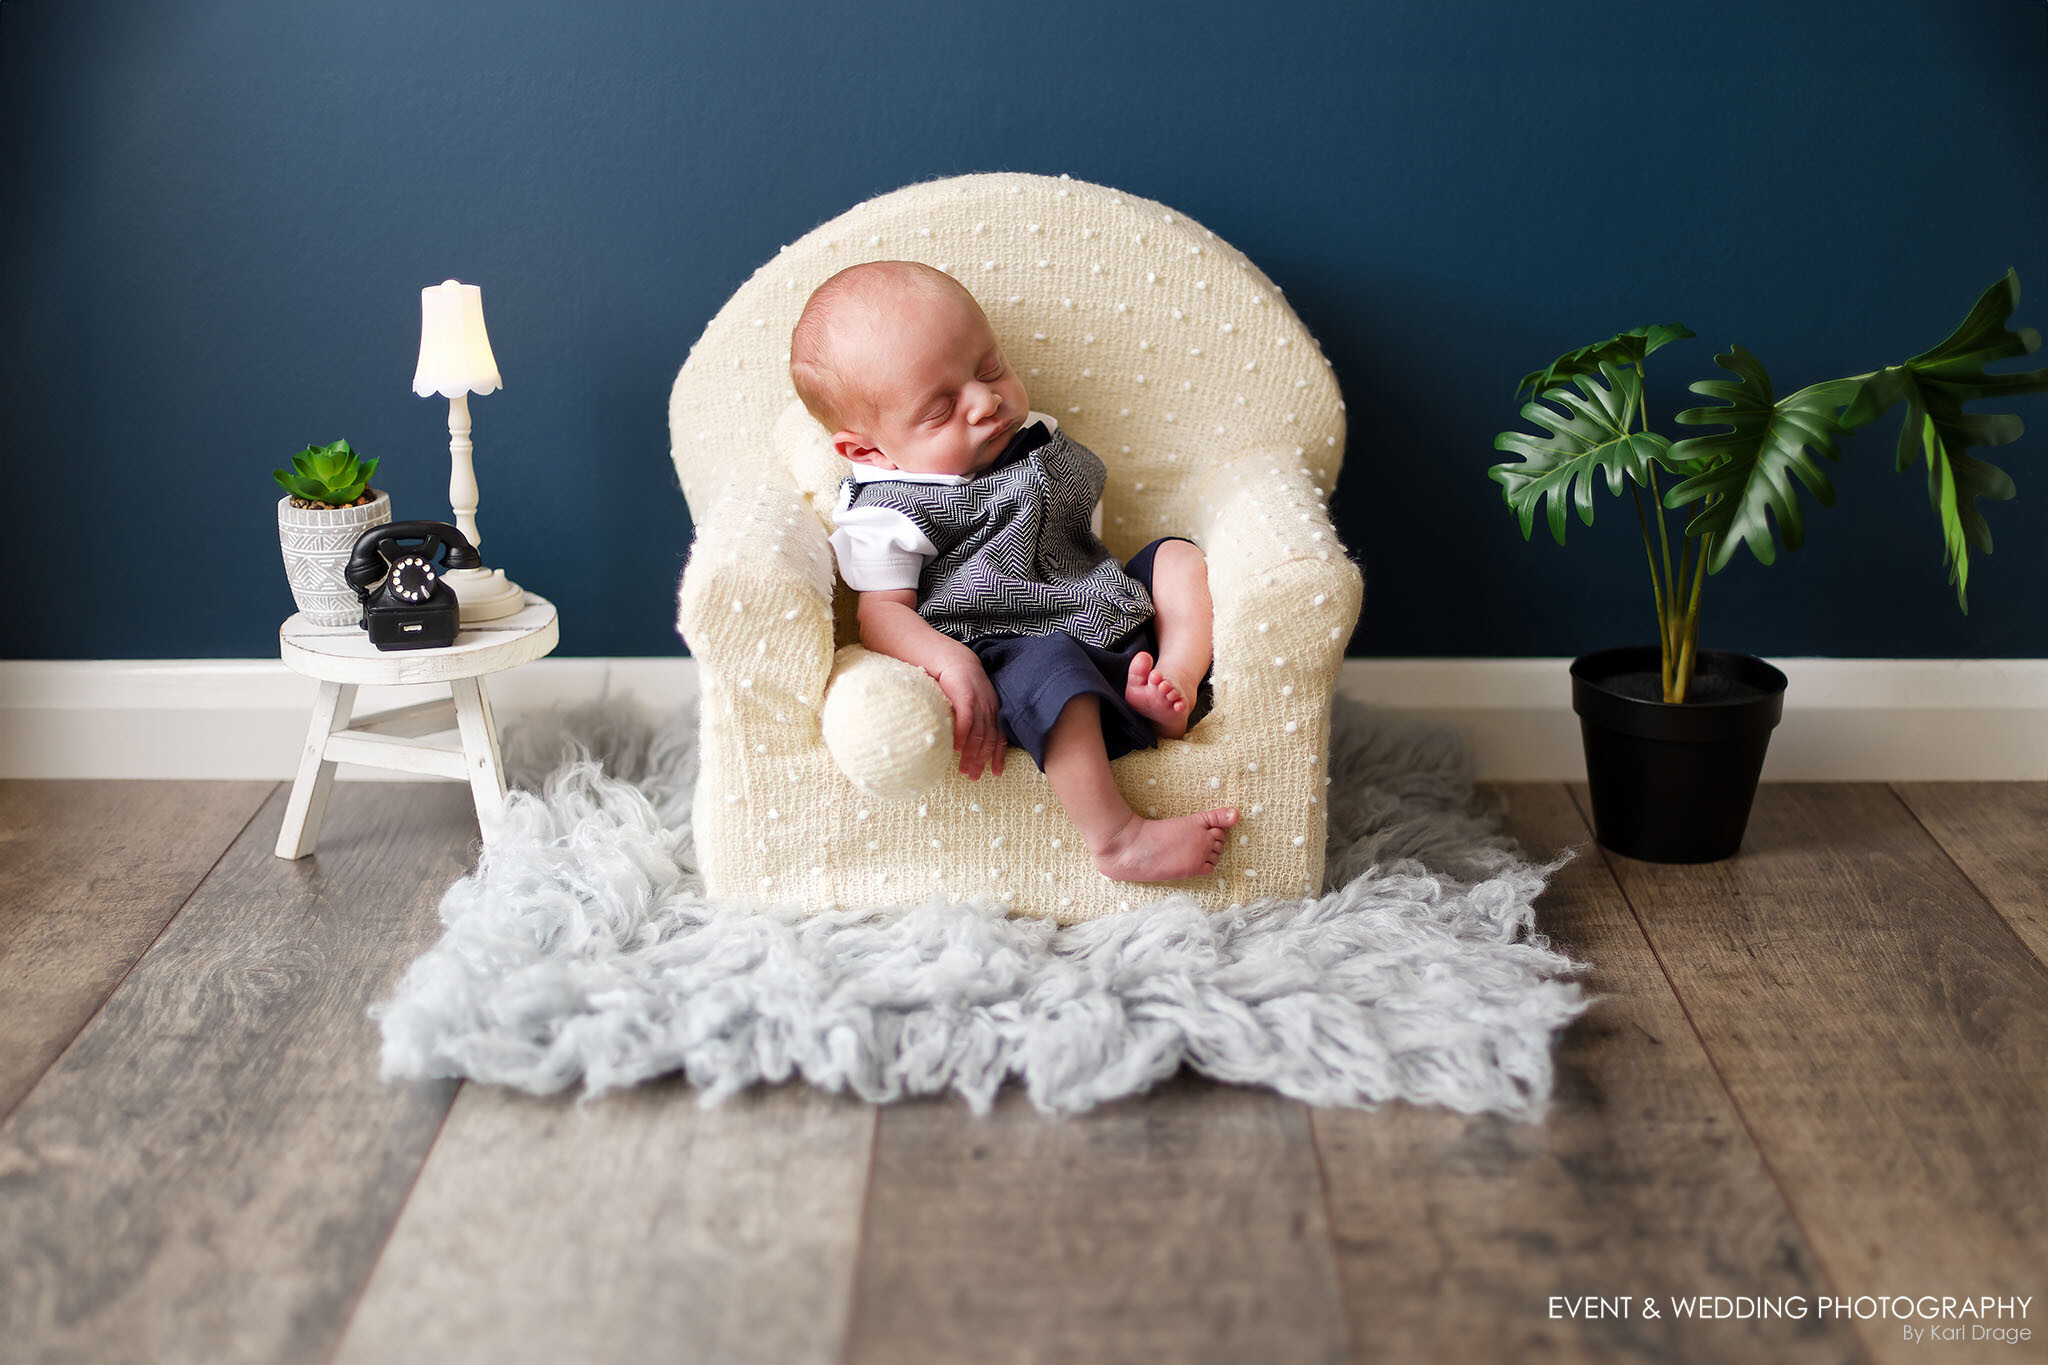 A baby boy fast asleep in a white woollen armchair.